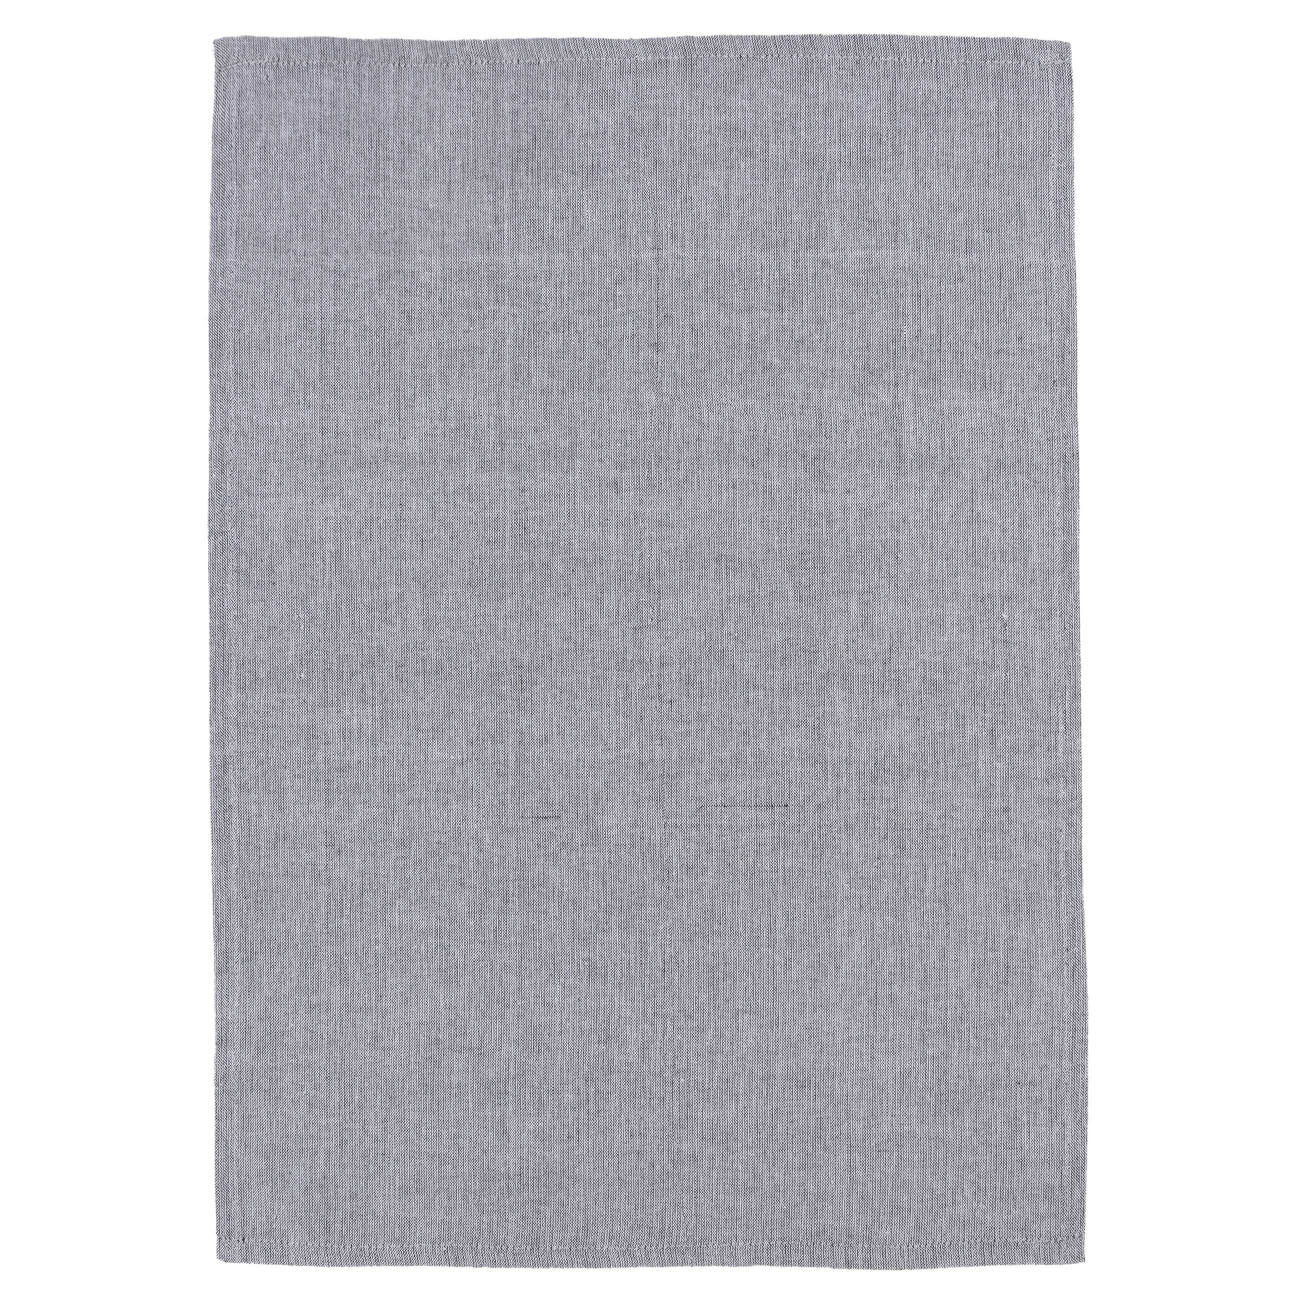 Полотенце кухонное, 40х60 см, хлопок, серый меланж, Melange grey полотенце для животных супервпитывающее 43 х 35 см розовое